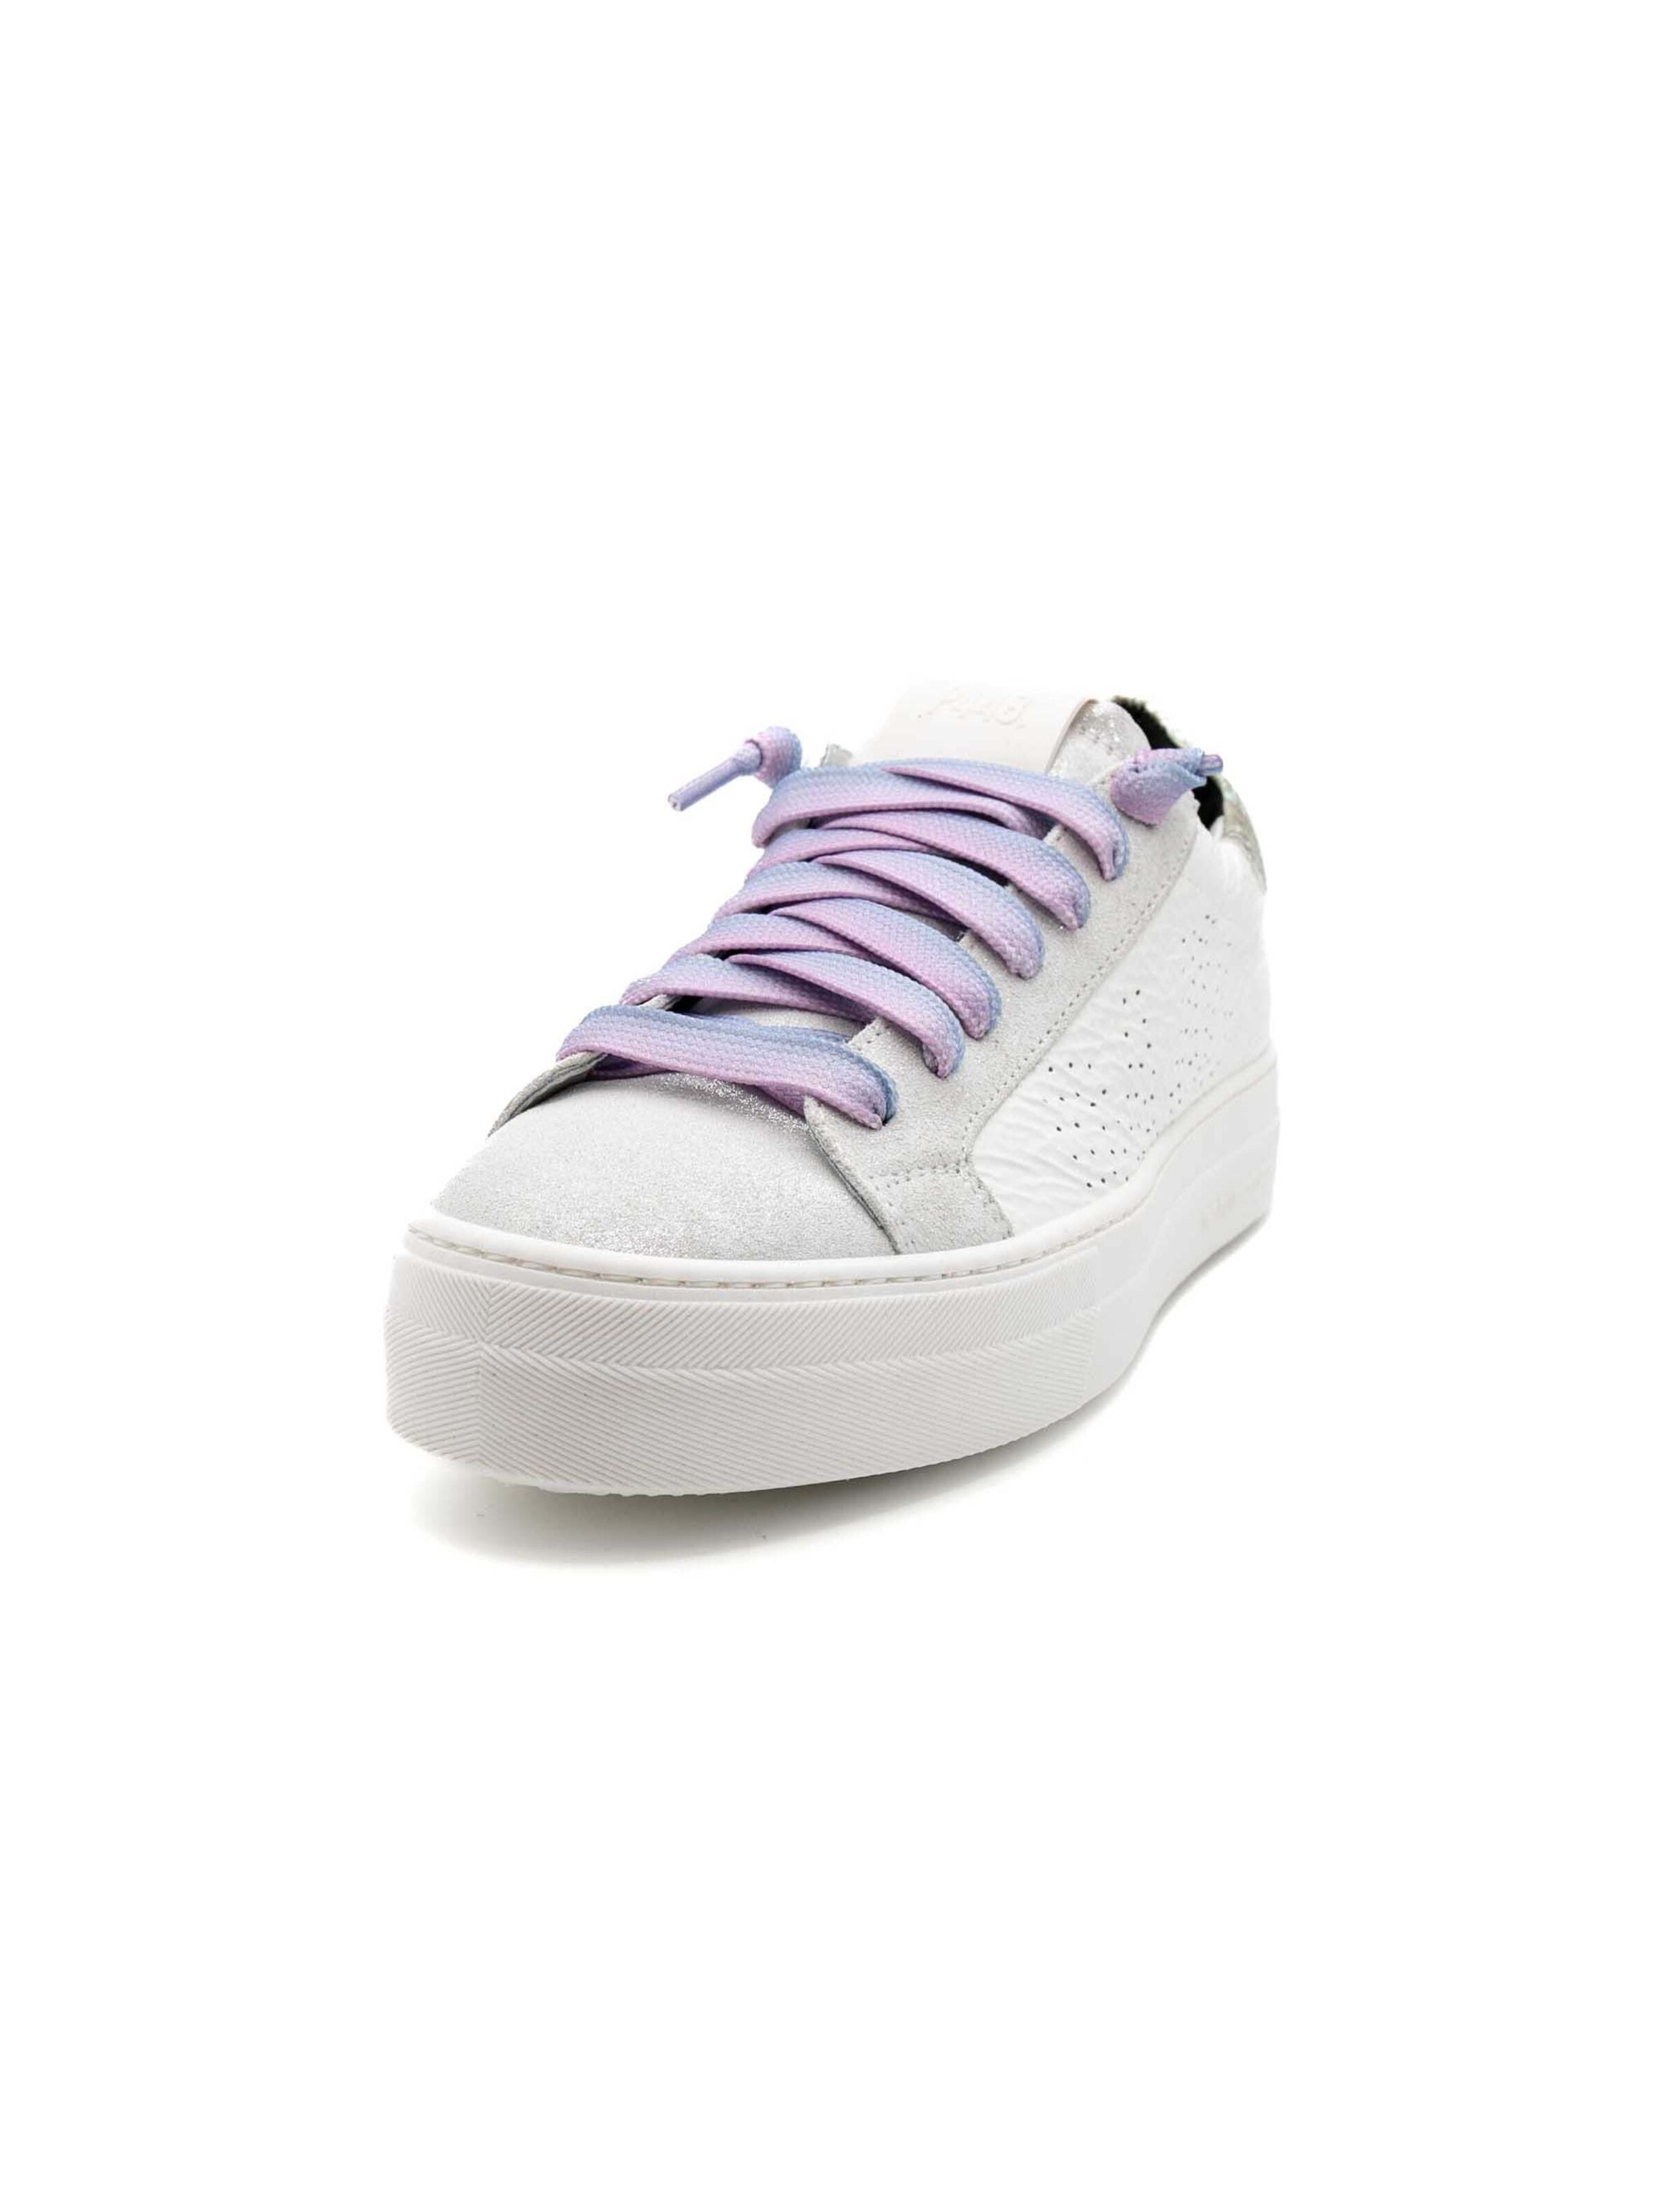 P448 Sneaker High Leather Woman Col. White/Pink Beige Size Eu 35 MF-P48011  | eBay